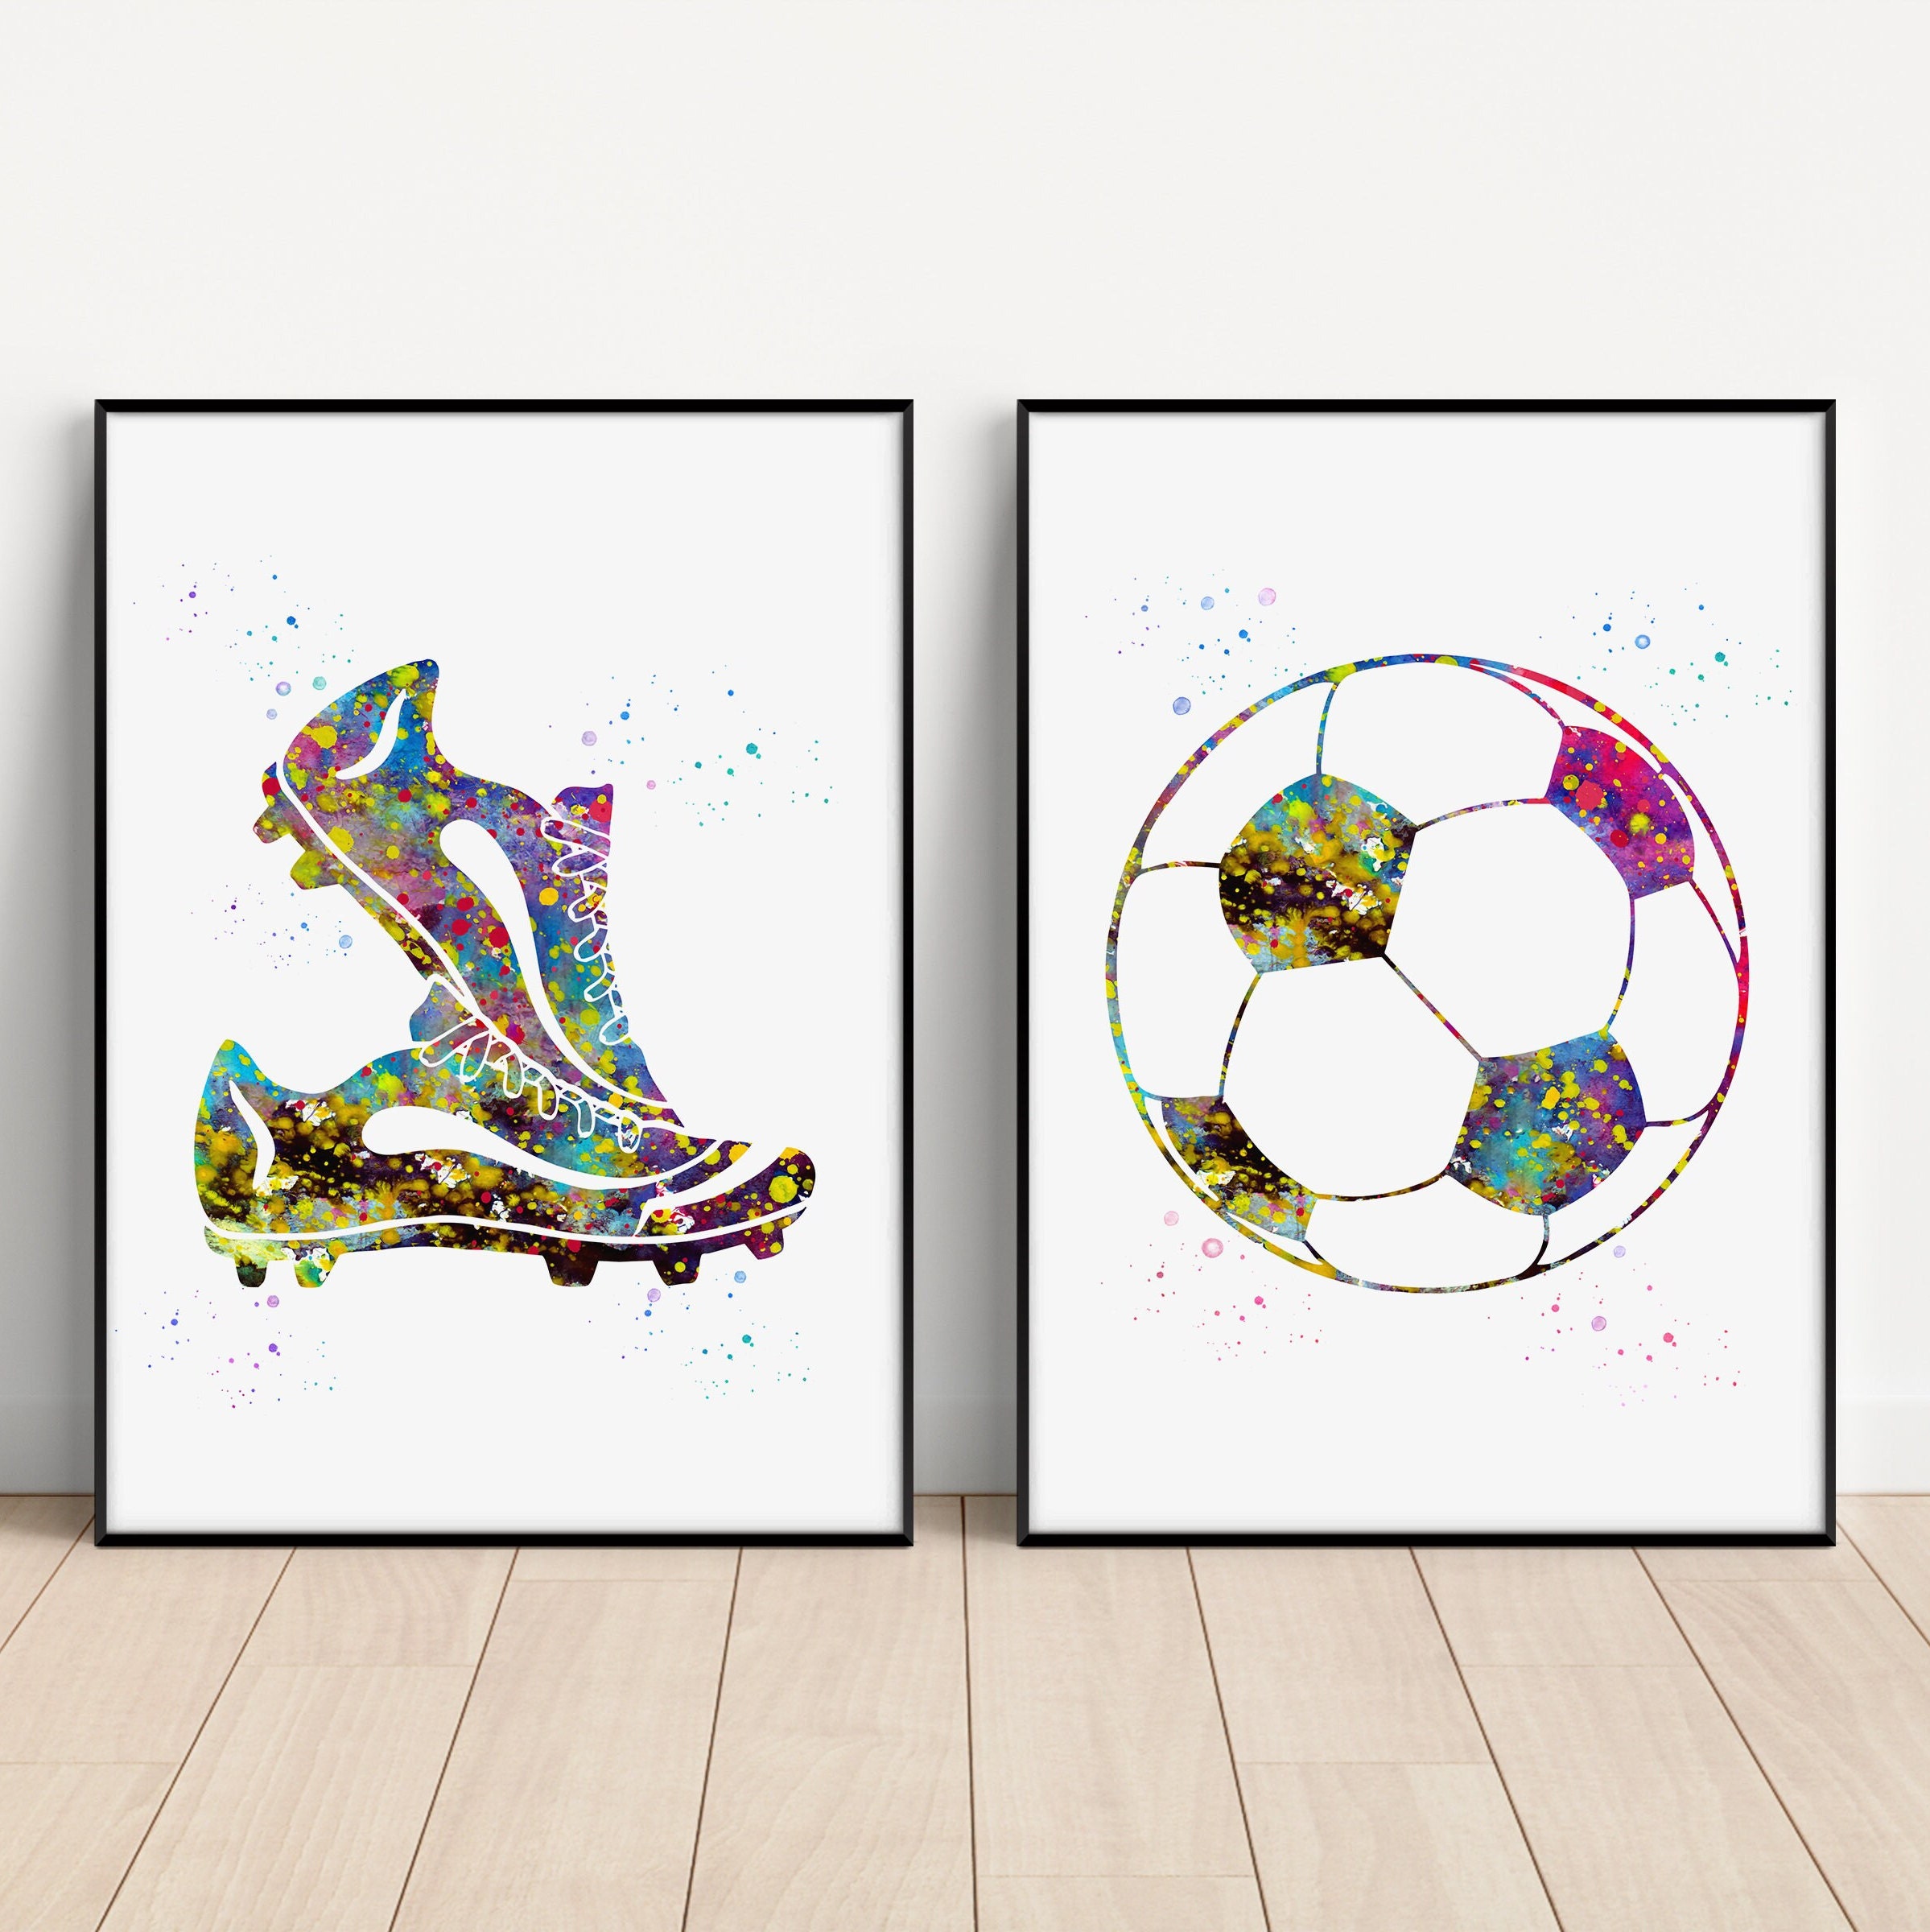  FC Sepahan Digital Art Poster,Football Wall Poster, Football  Wall Print, Football Wall Art, Football Decor : Handmade Products